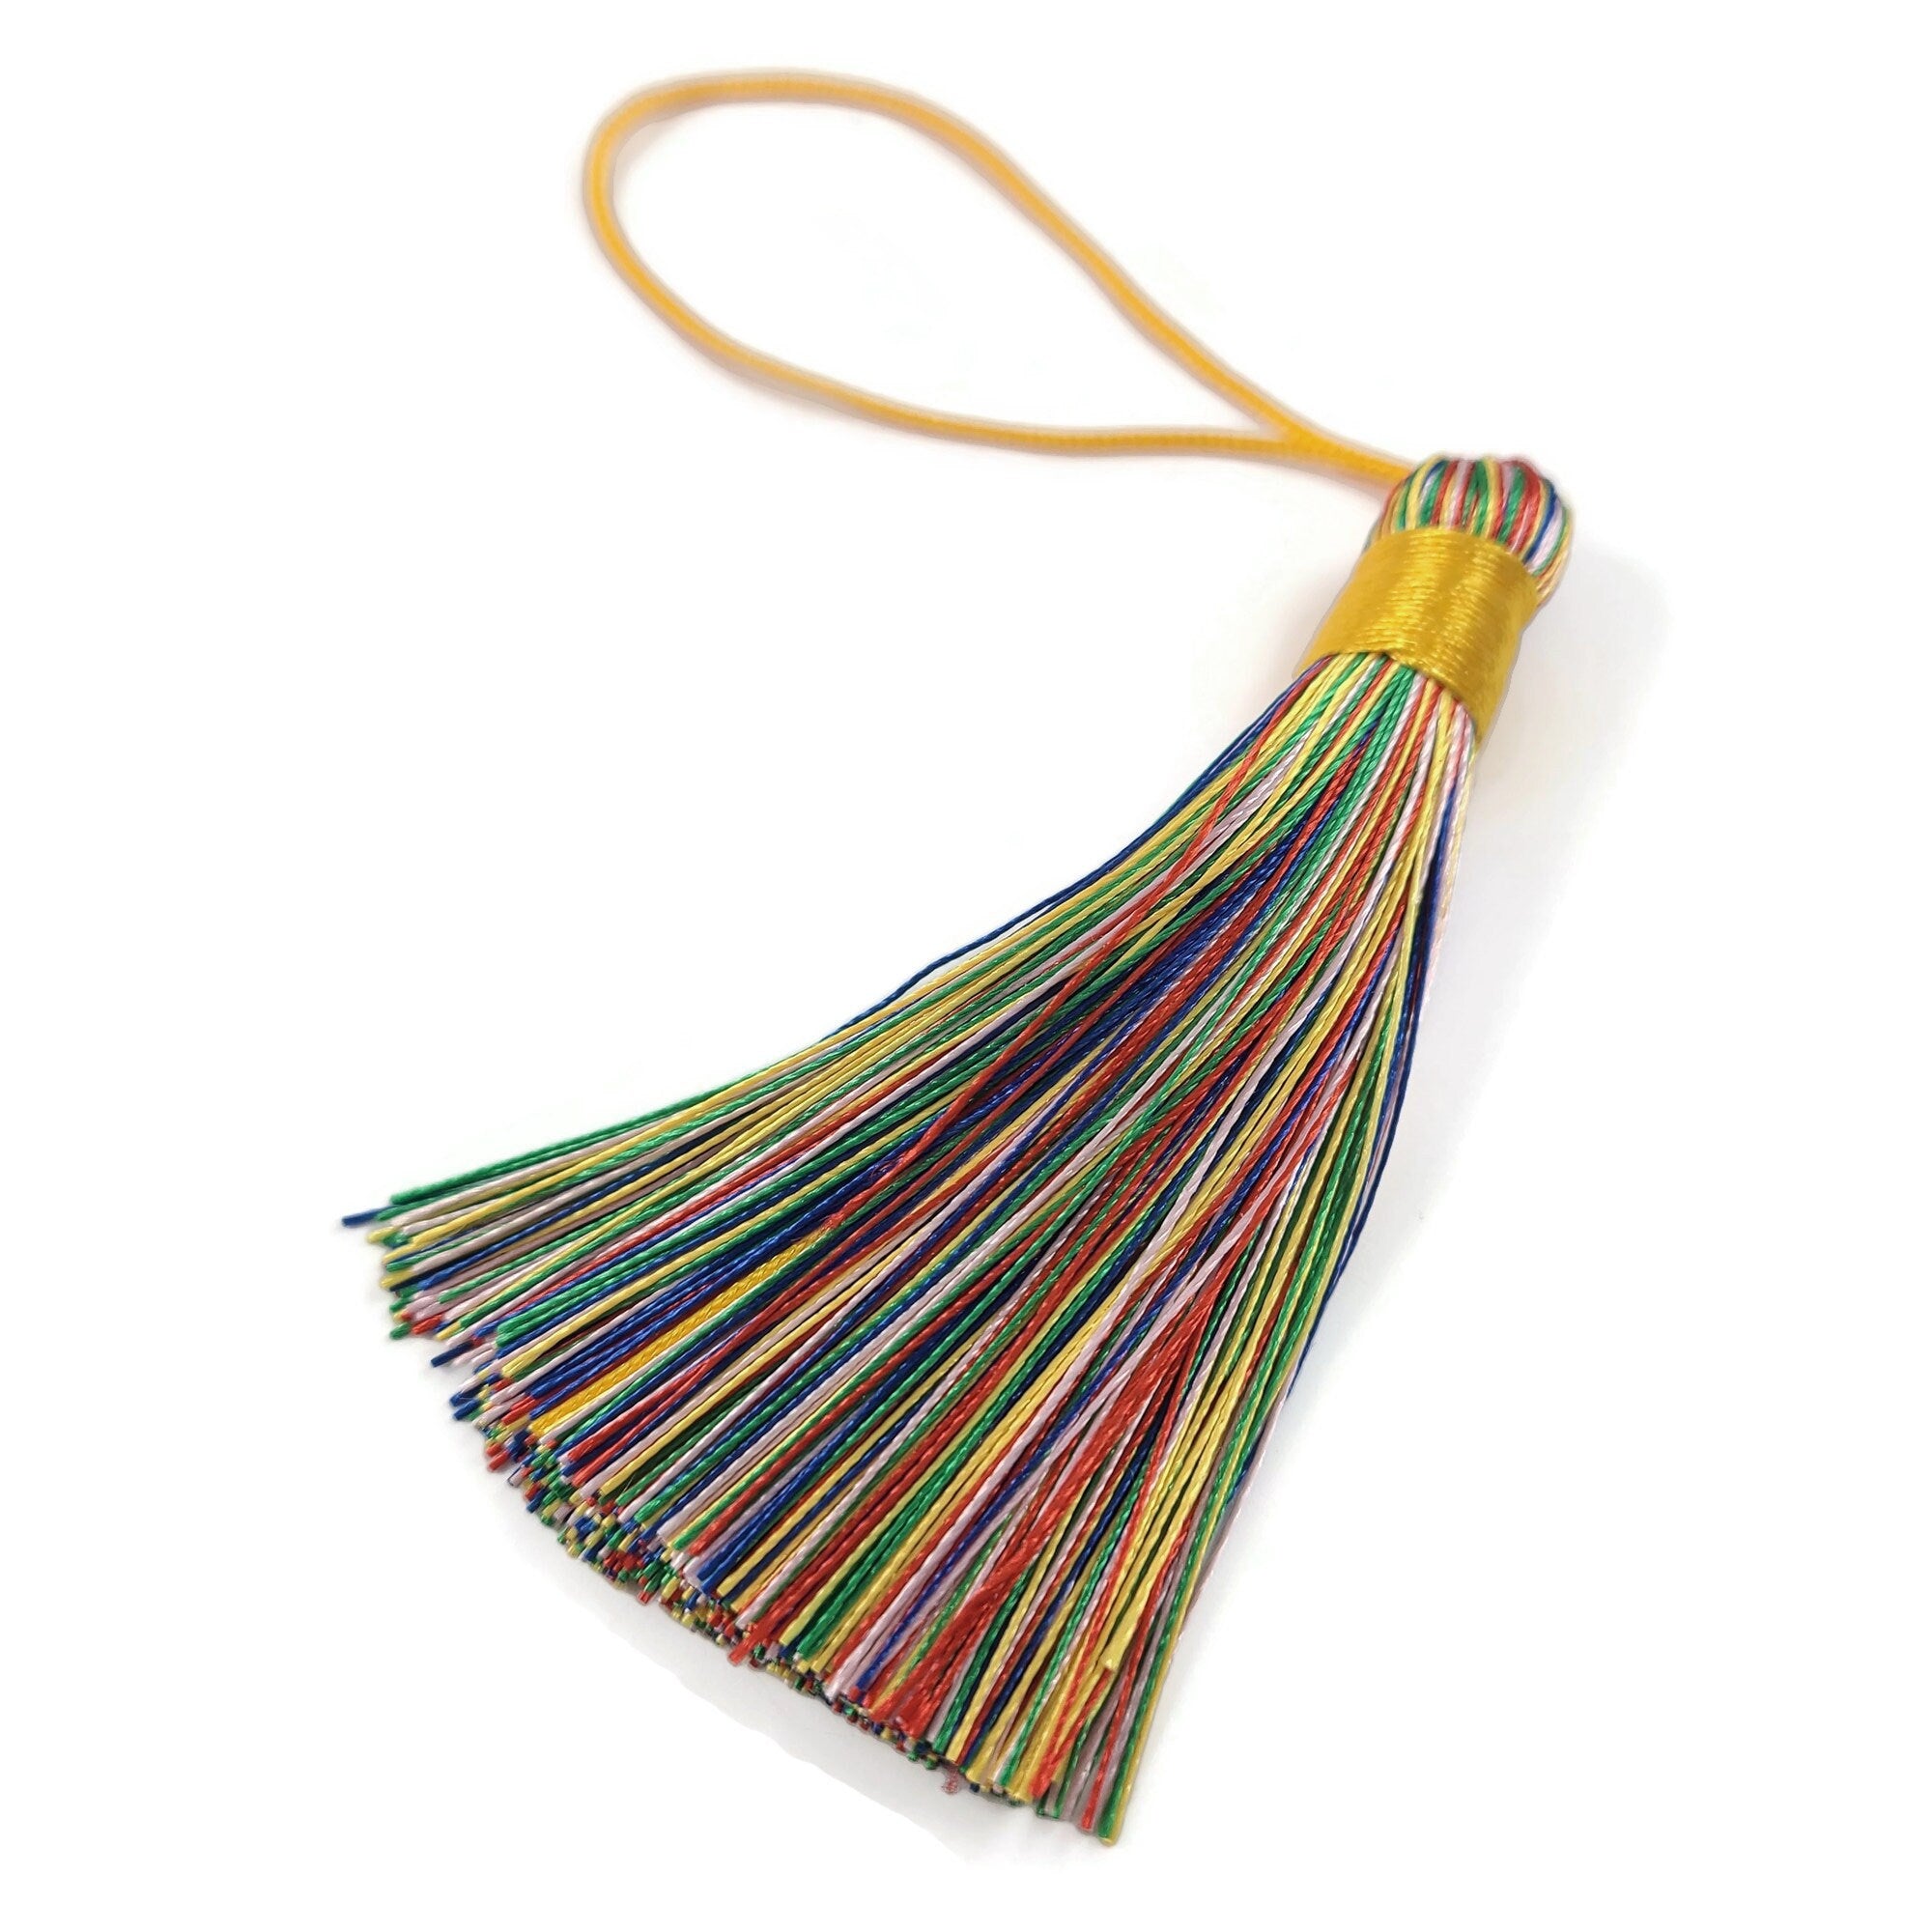 Big multicolor silky tassel, Jewelry making supplies, Boho rainbow decor DIY, 3 inches